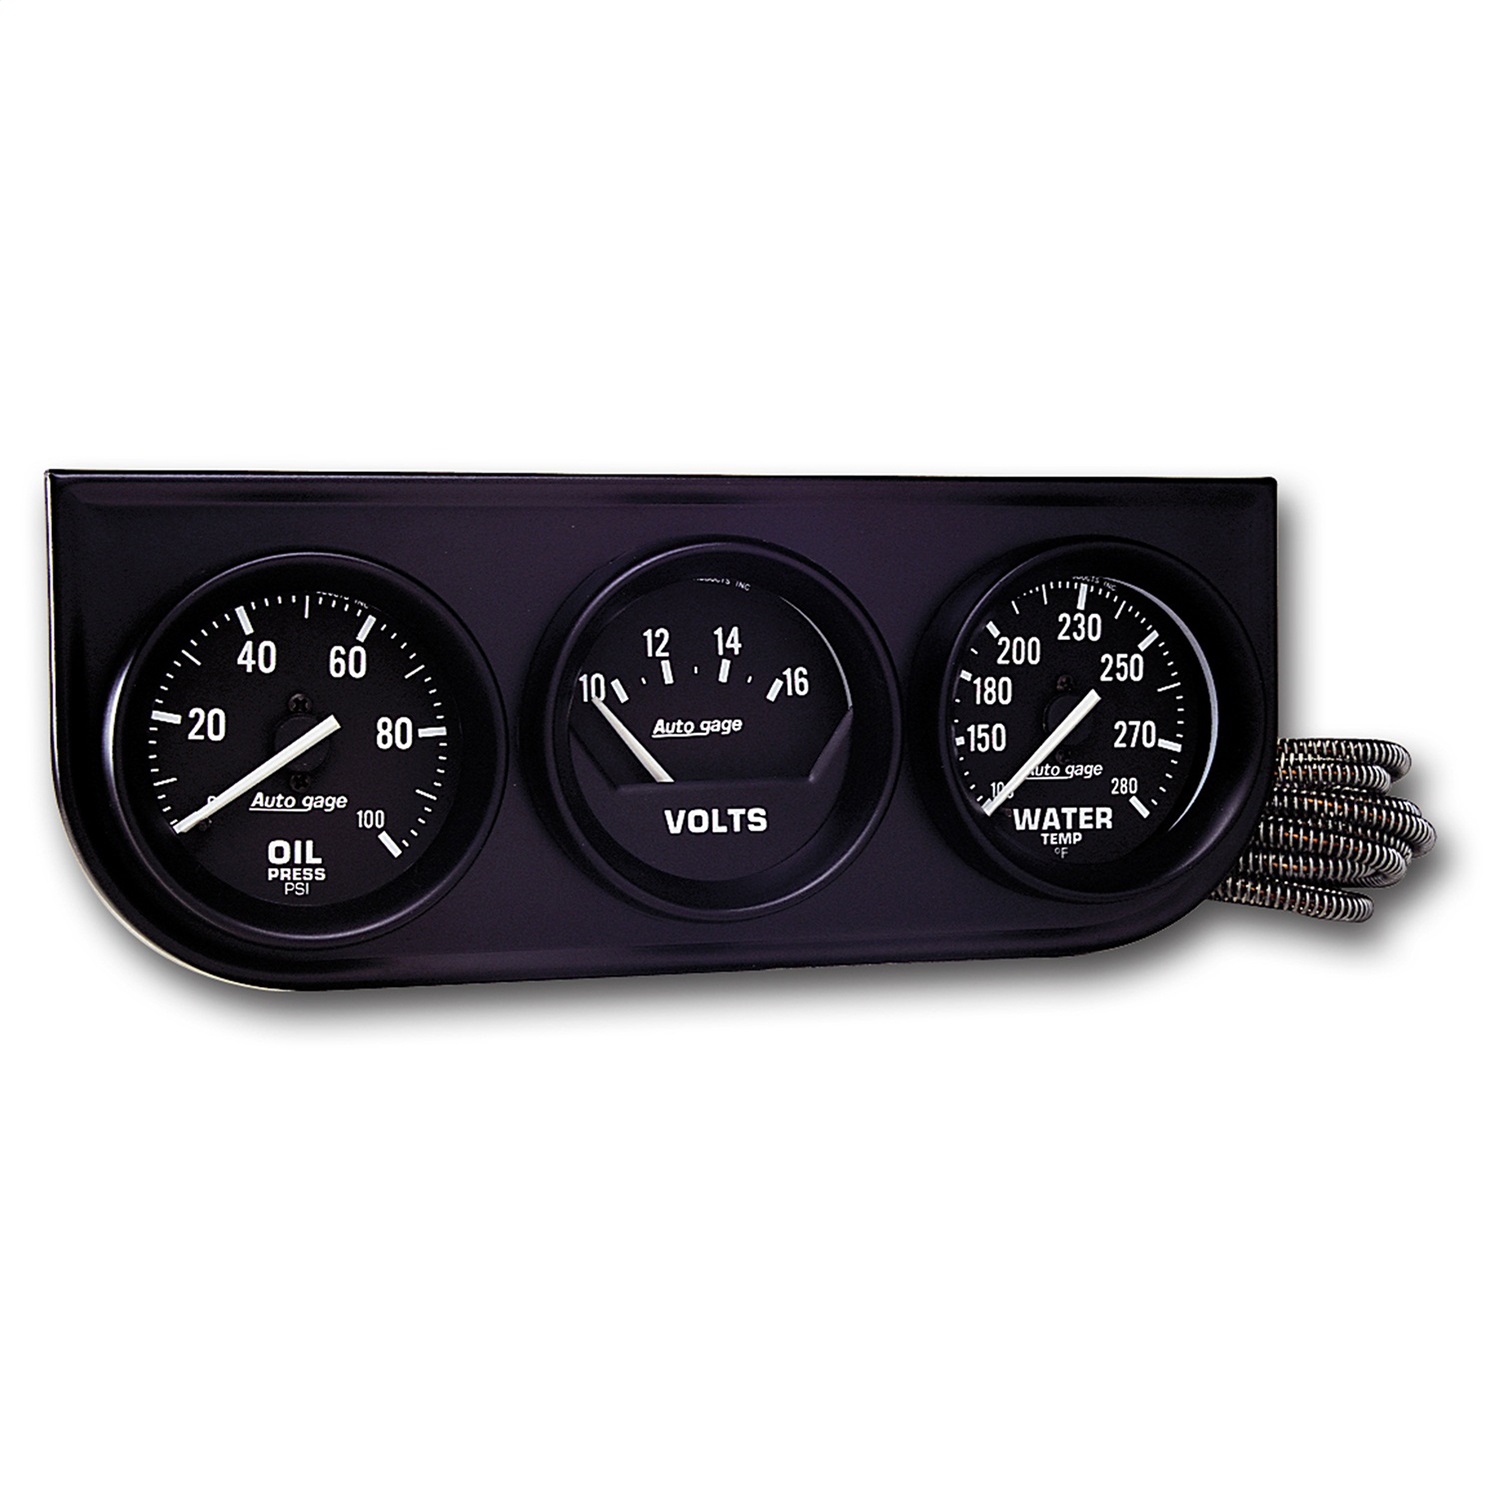 Auto Meter Auto Meter 2397 Autogage; Oil/Volt/Water; Black Console